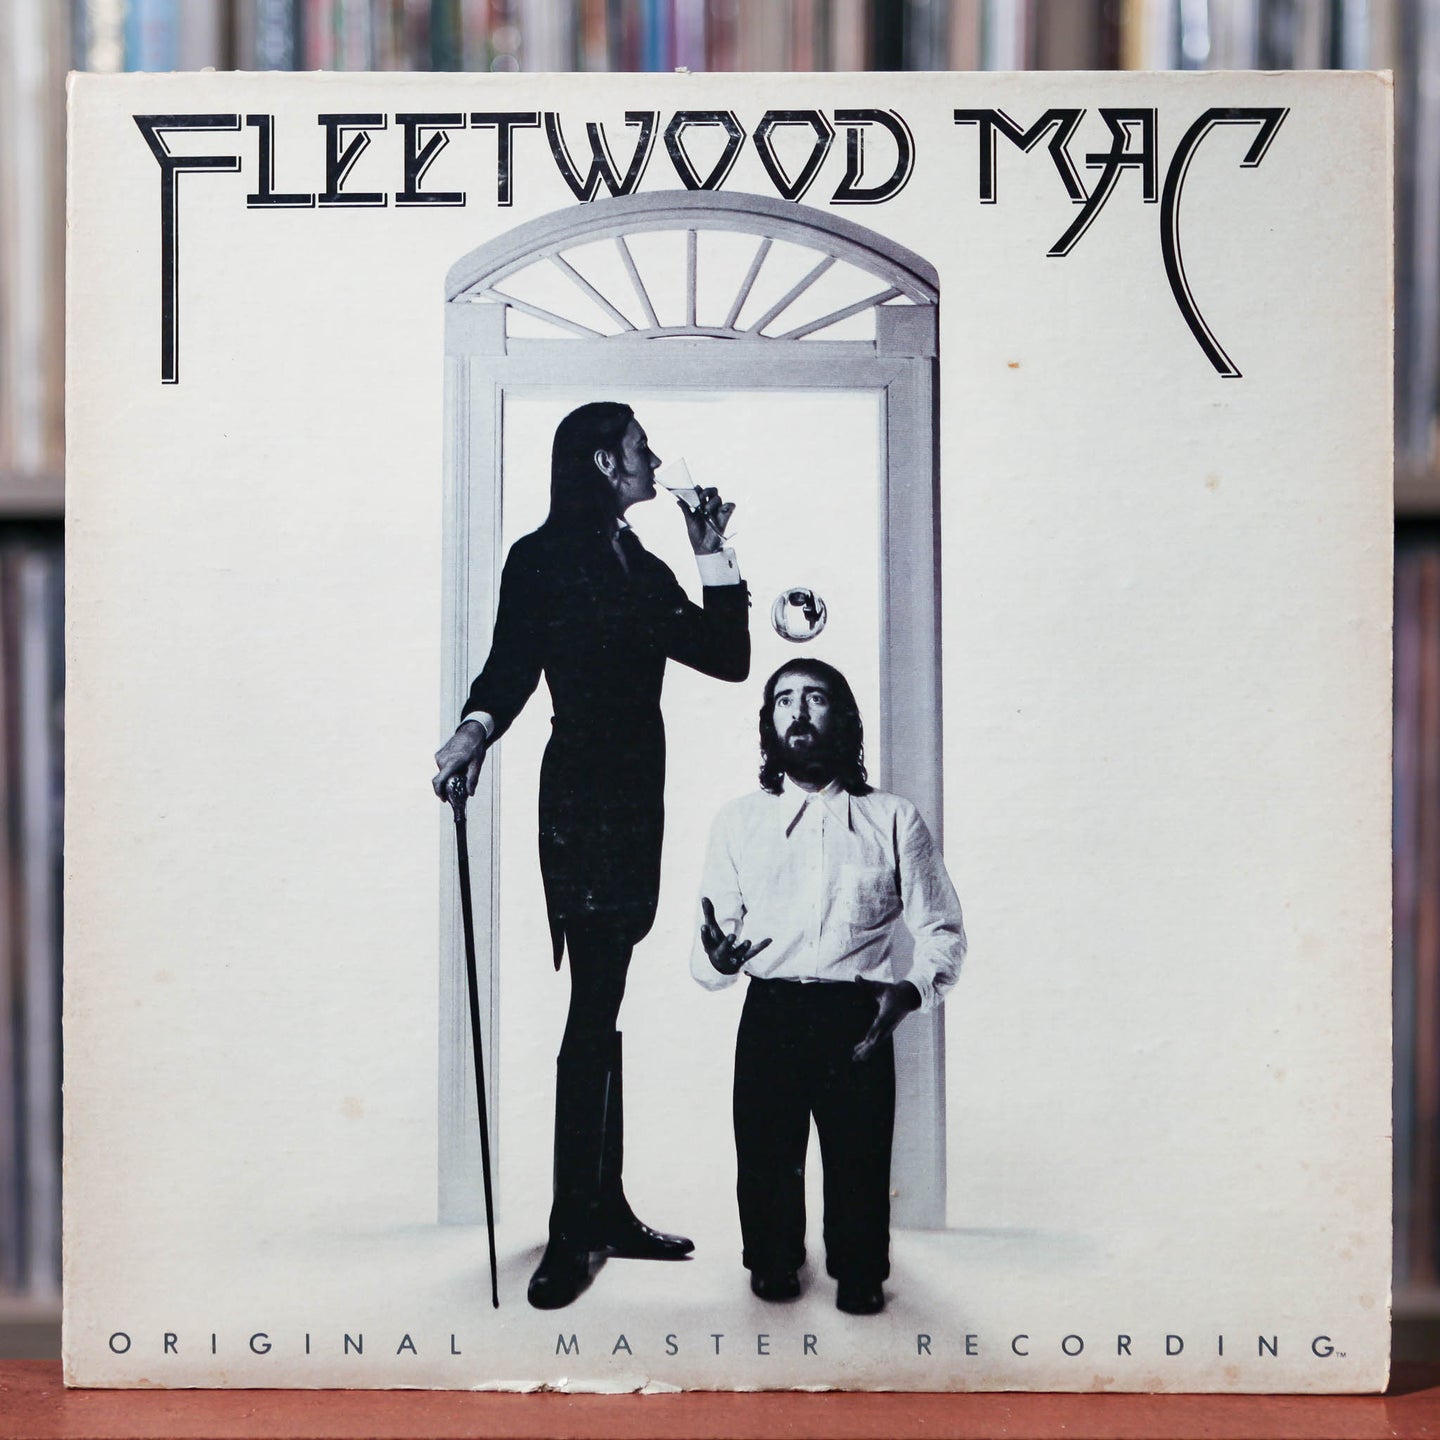 Fleetwood Mac - Self-titled - MFSL 1-012 - 1979 Mobile Fidelity, VG/EX